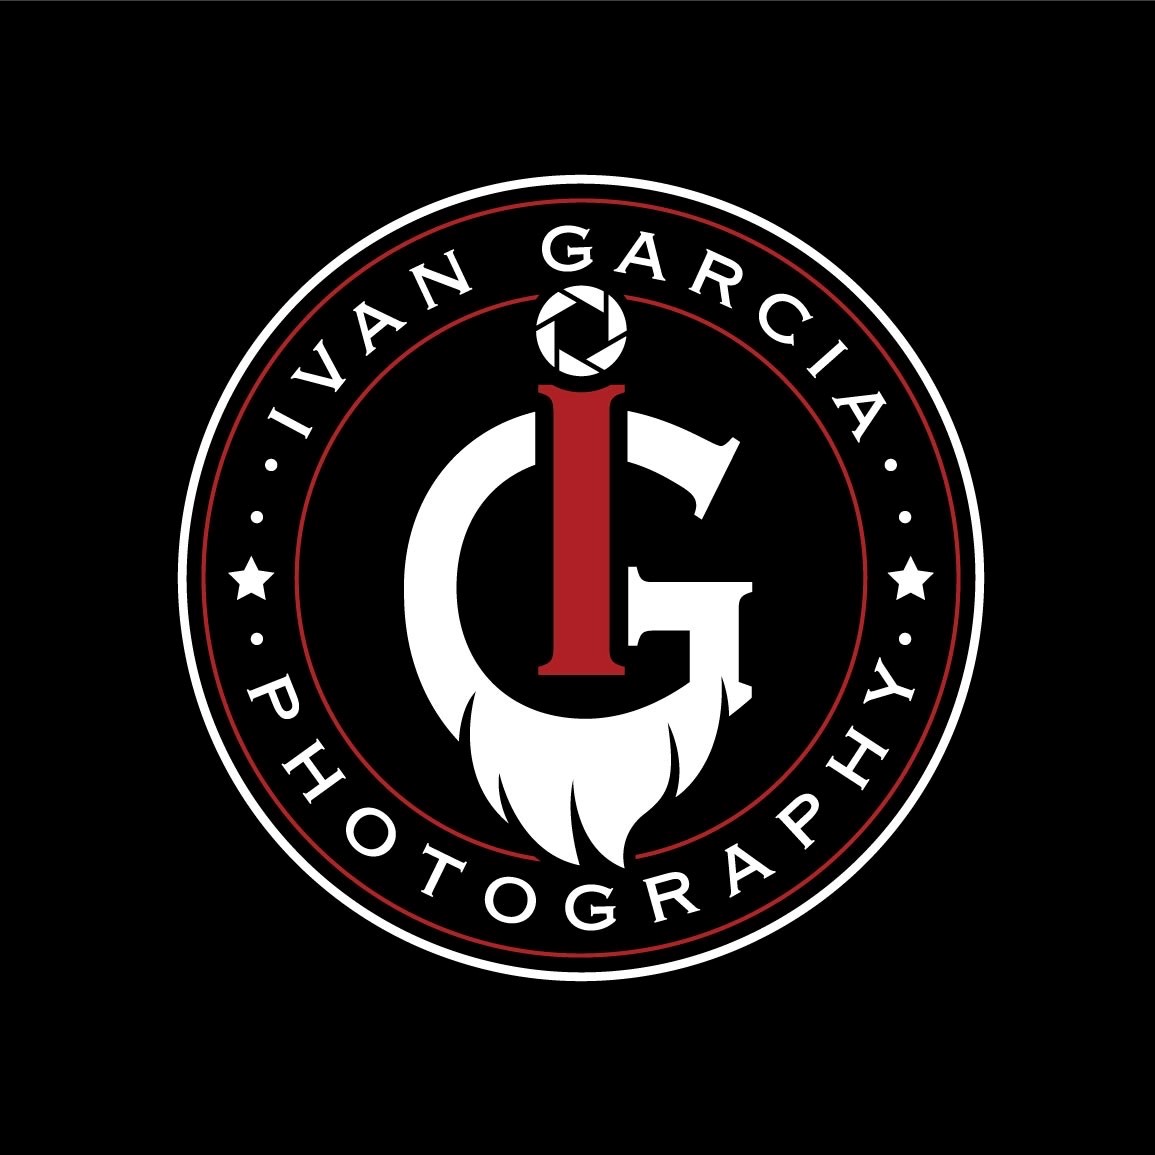 Ivan Garcia Photography